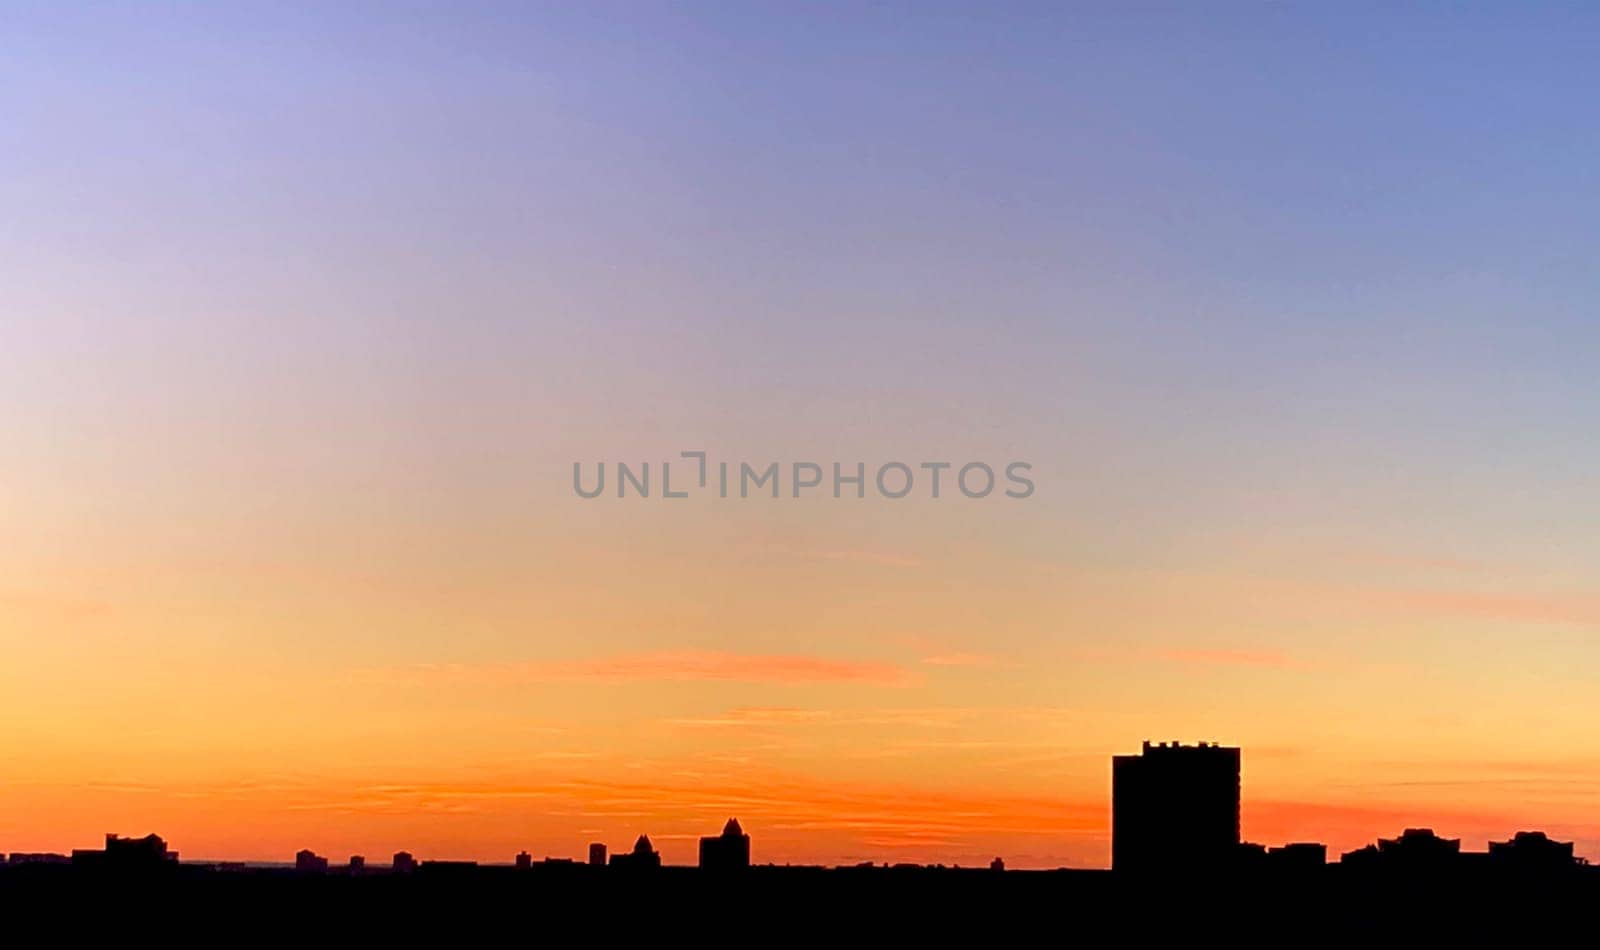 Evening city sky, sunset over city, beautiful landscape. High quality photo